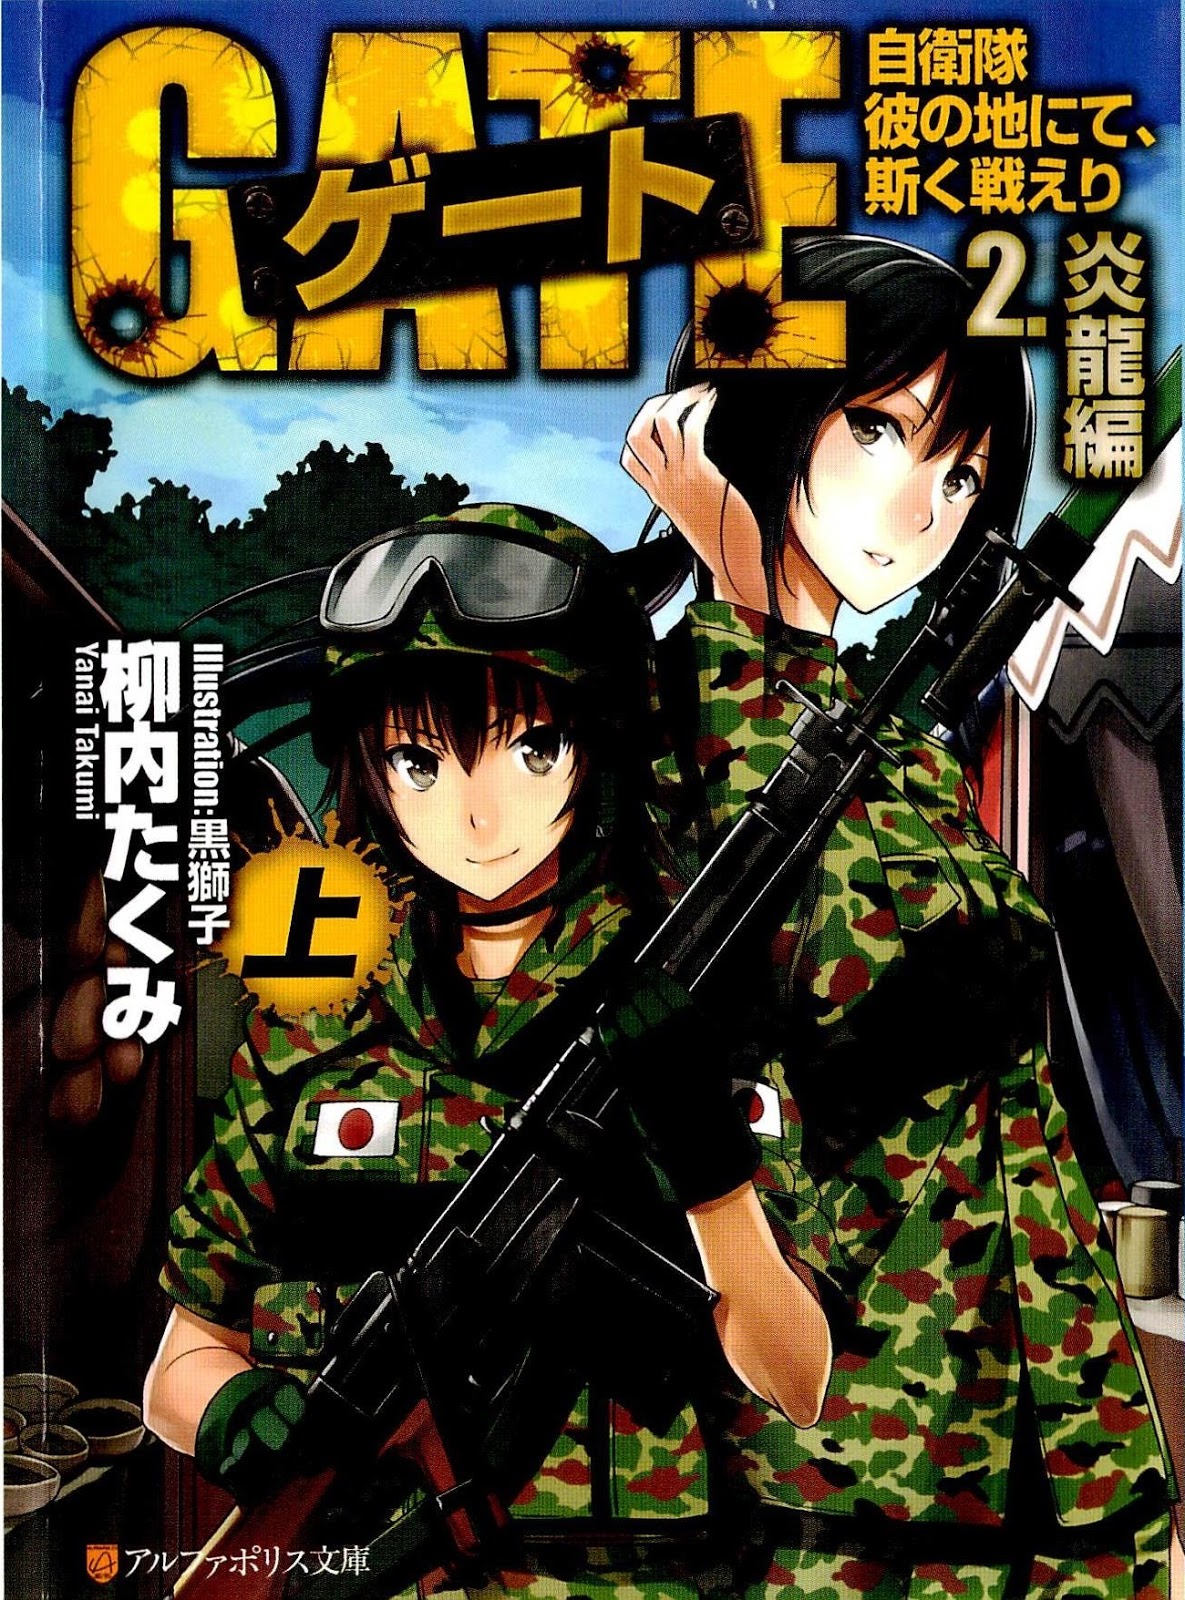 GATE : Where the JSDF Fought Vol. 1-23 set Manga Comics Japanese